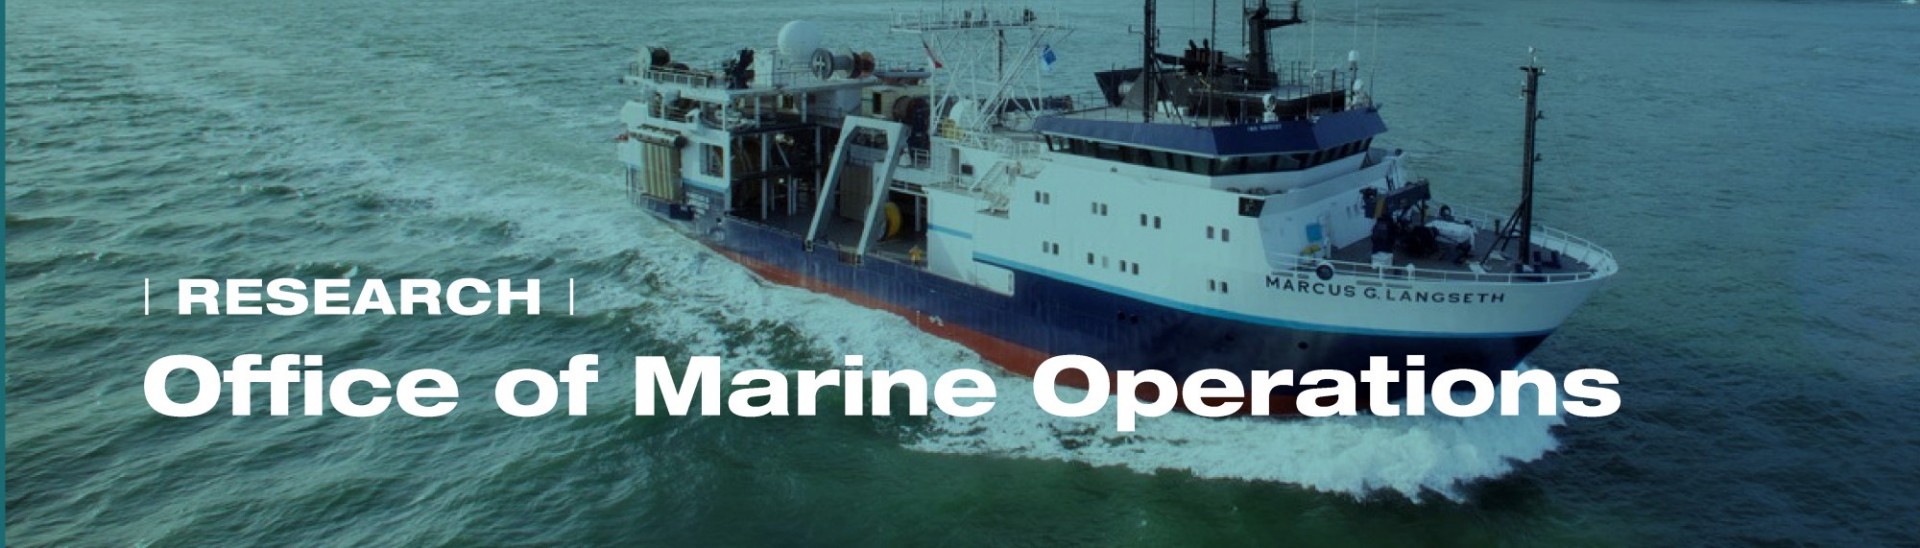 Lamont-Doherty Office of Marine Operations